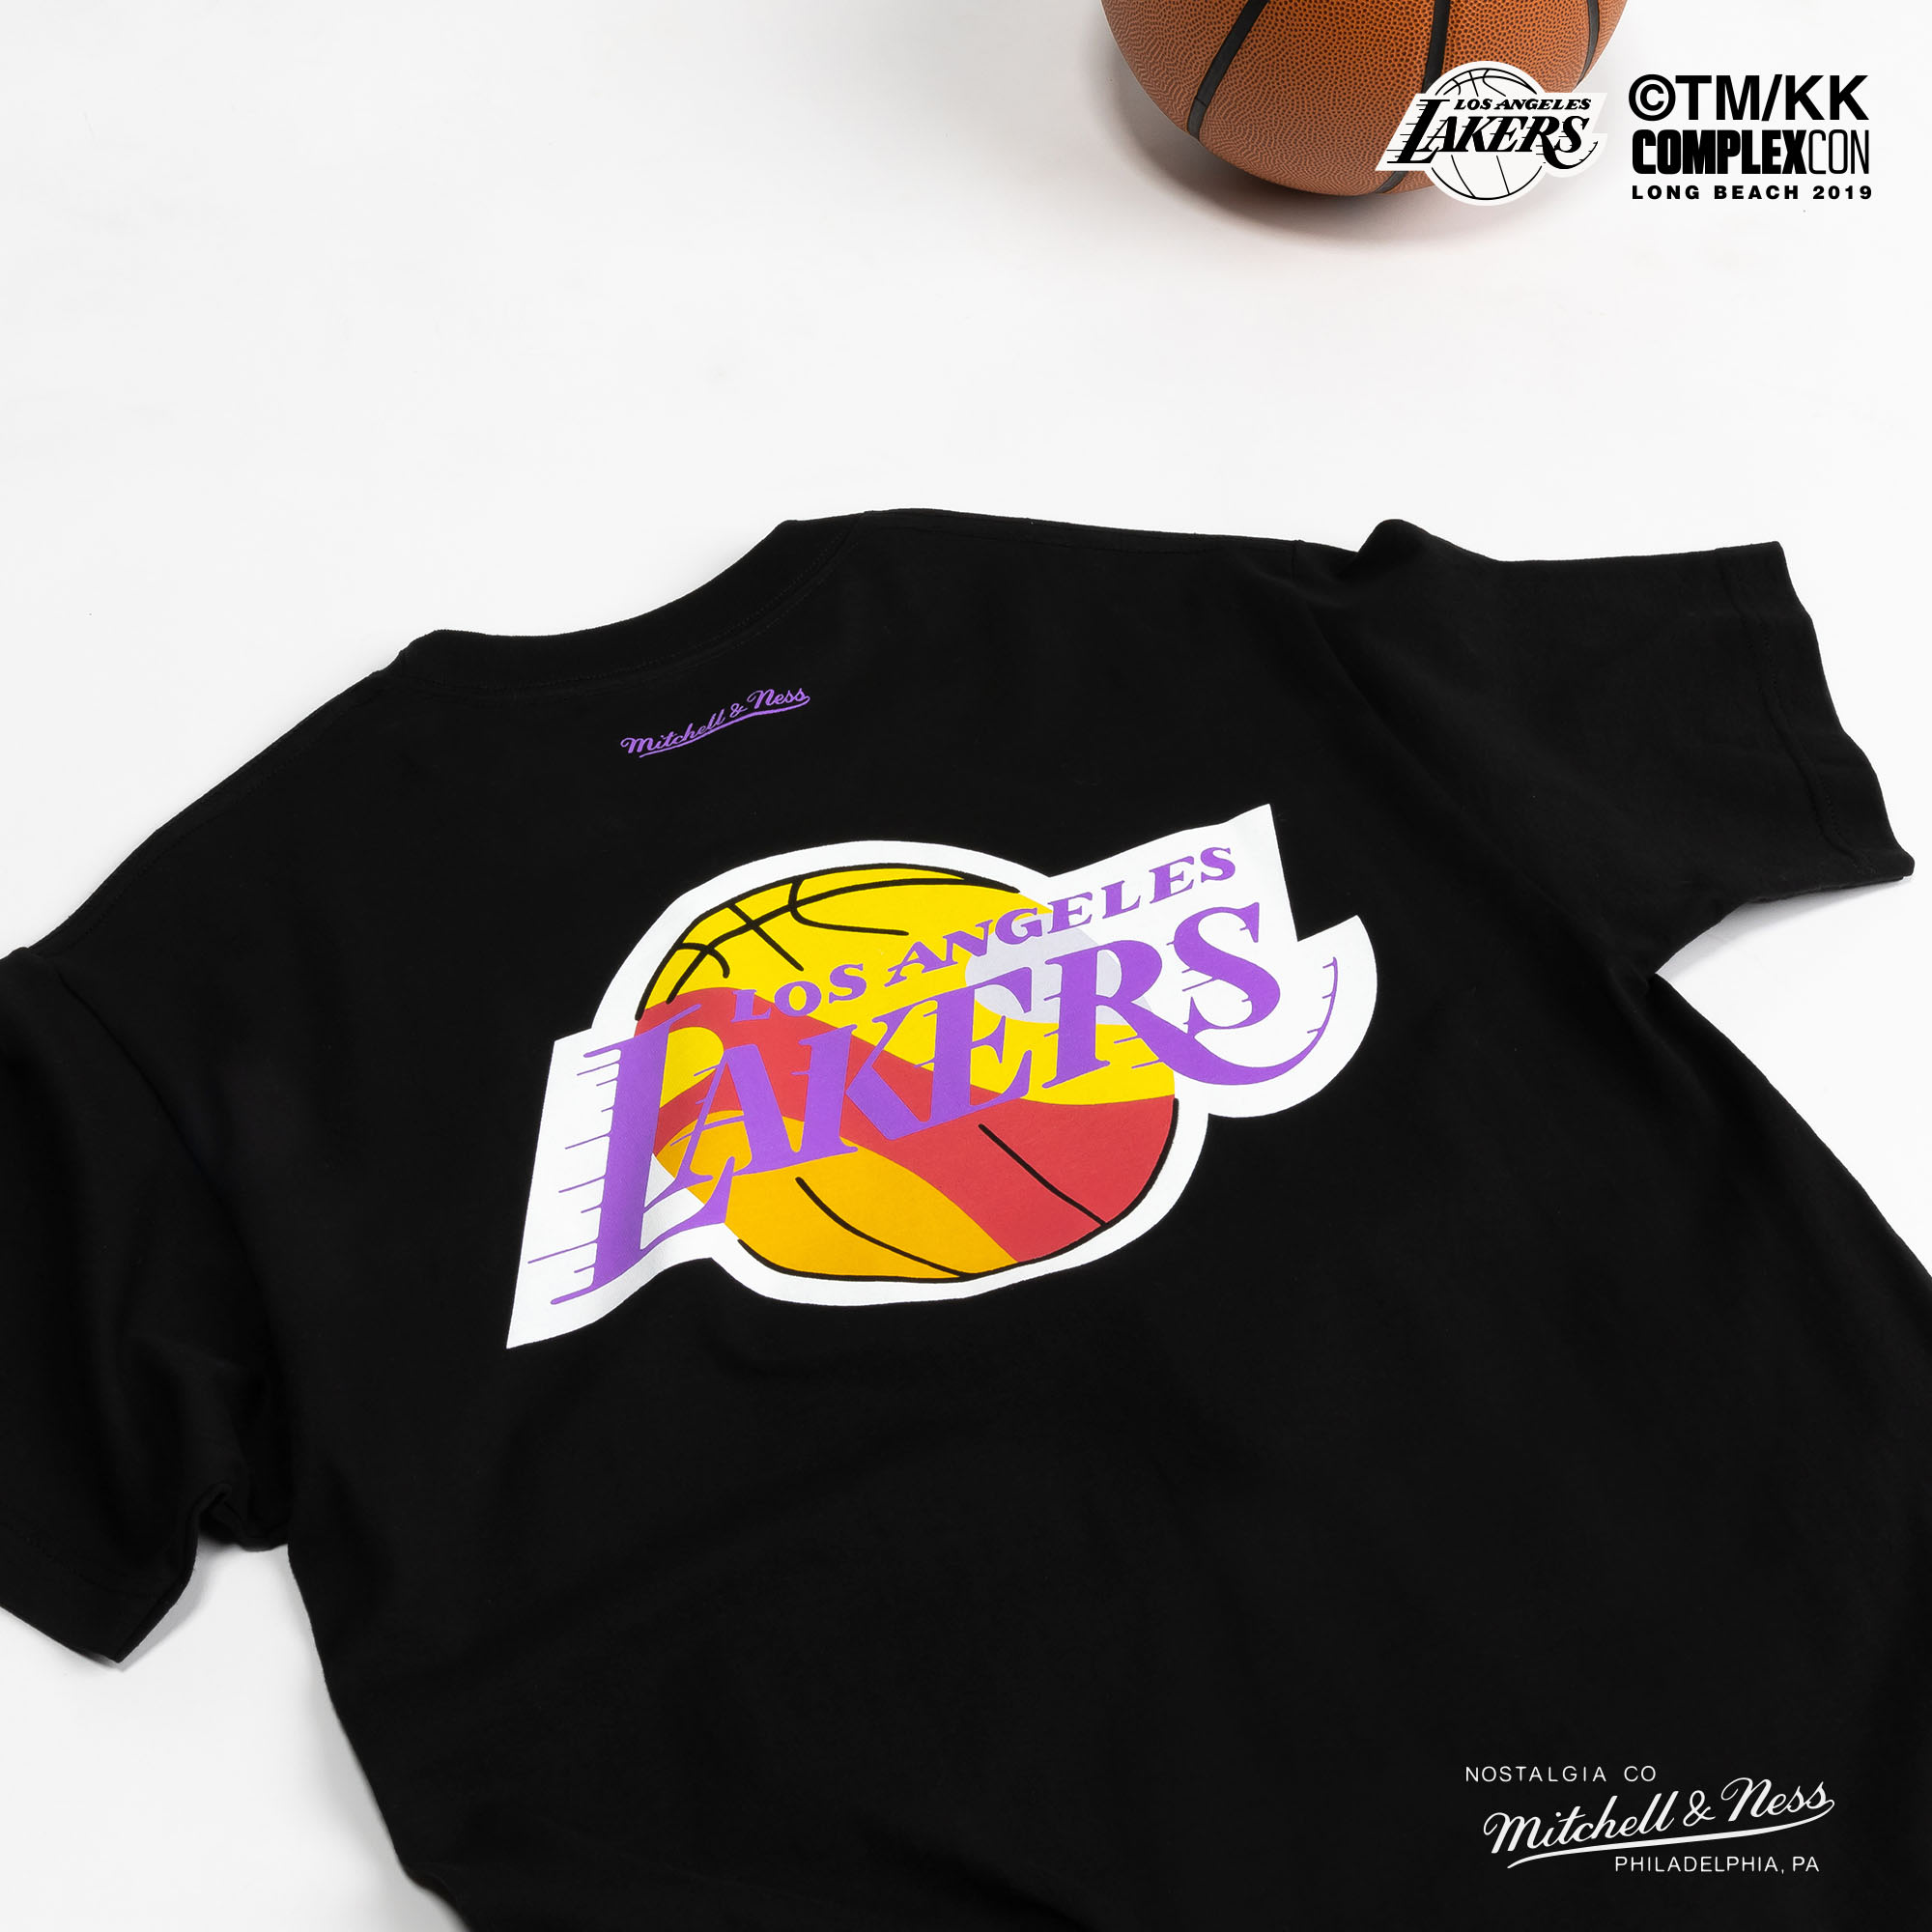 Takashi Murakami x Complexcon 'La Lakers' Jersey - Purple S / 19149-LALPURP by Takashi Murakami x Complexcon